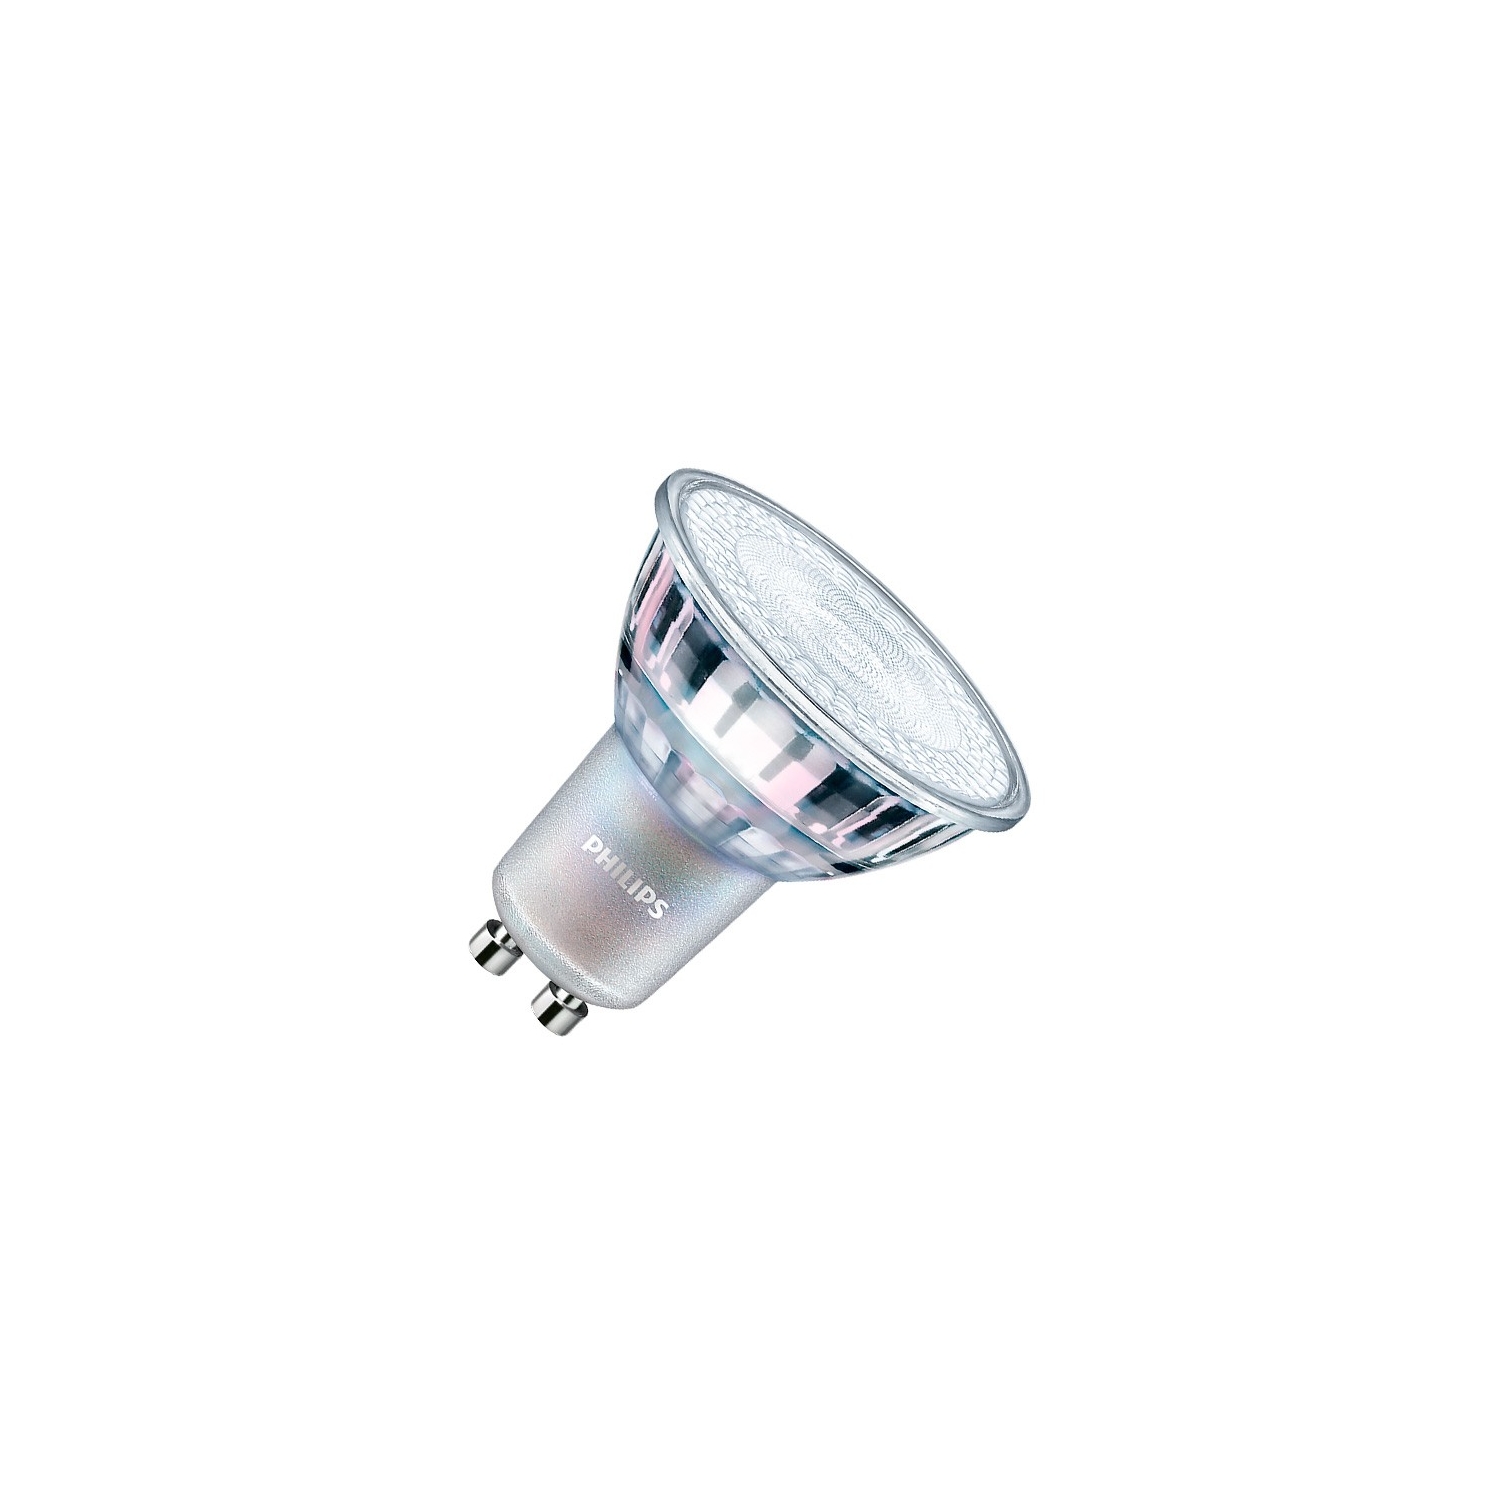 REFURBISHHOUSE 10x G4 HALOGENE 10W ampoules Bulb Blanc Chaud 12V 3000K 